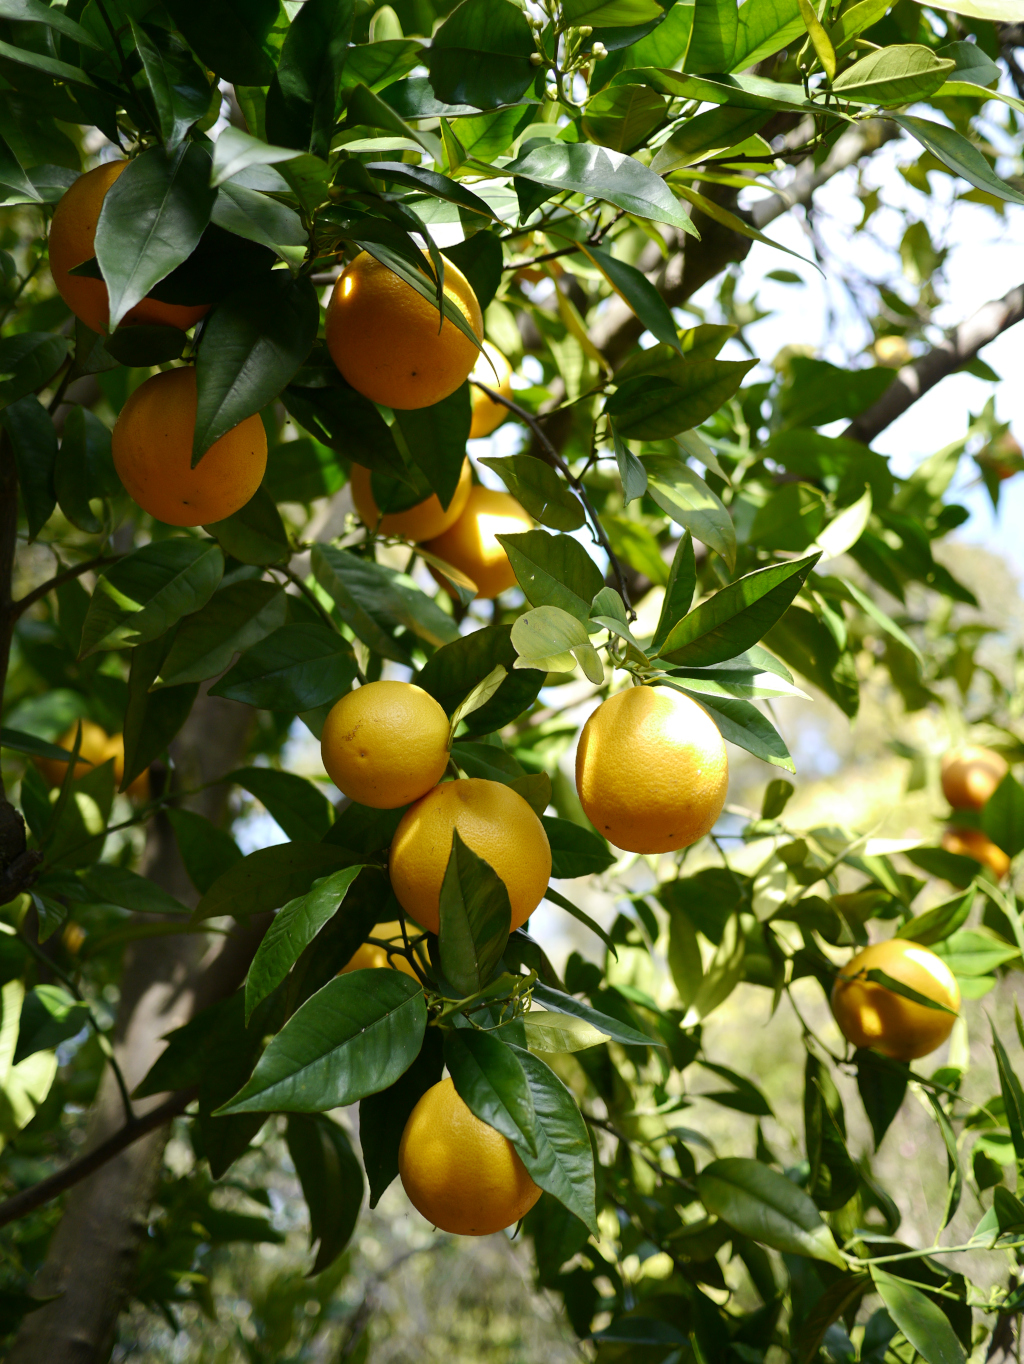 Sample Panasonic GX1 + 20mm Photo: Oranges in a tree